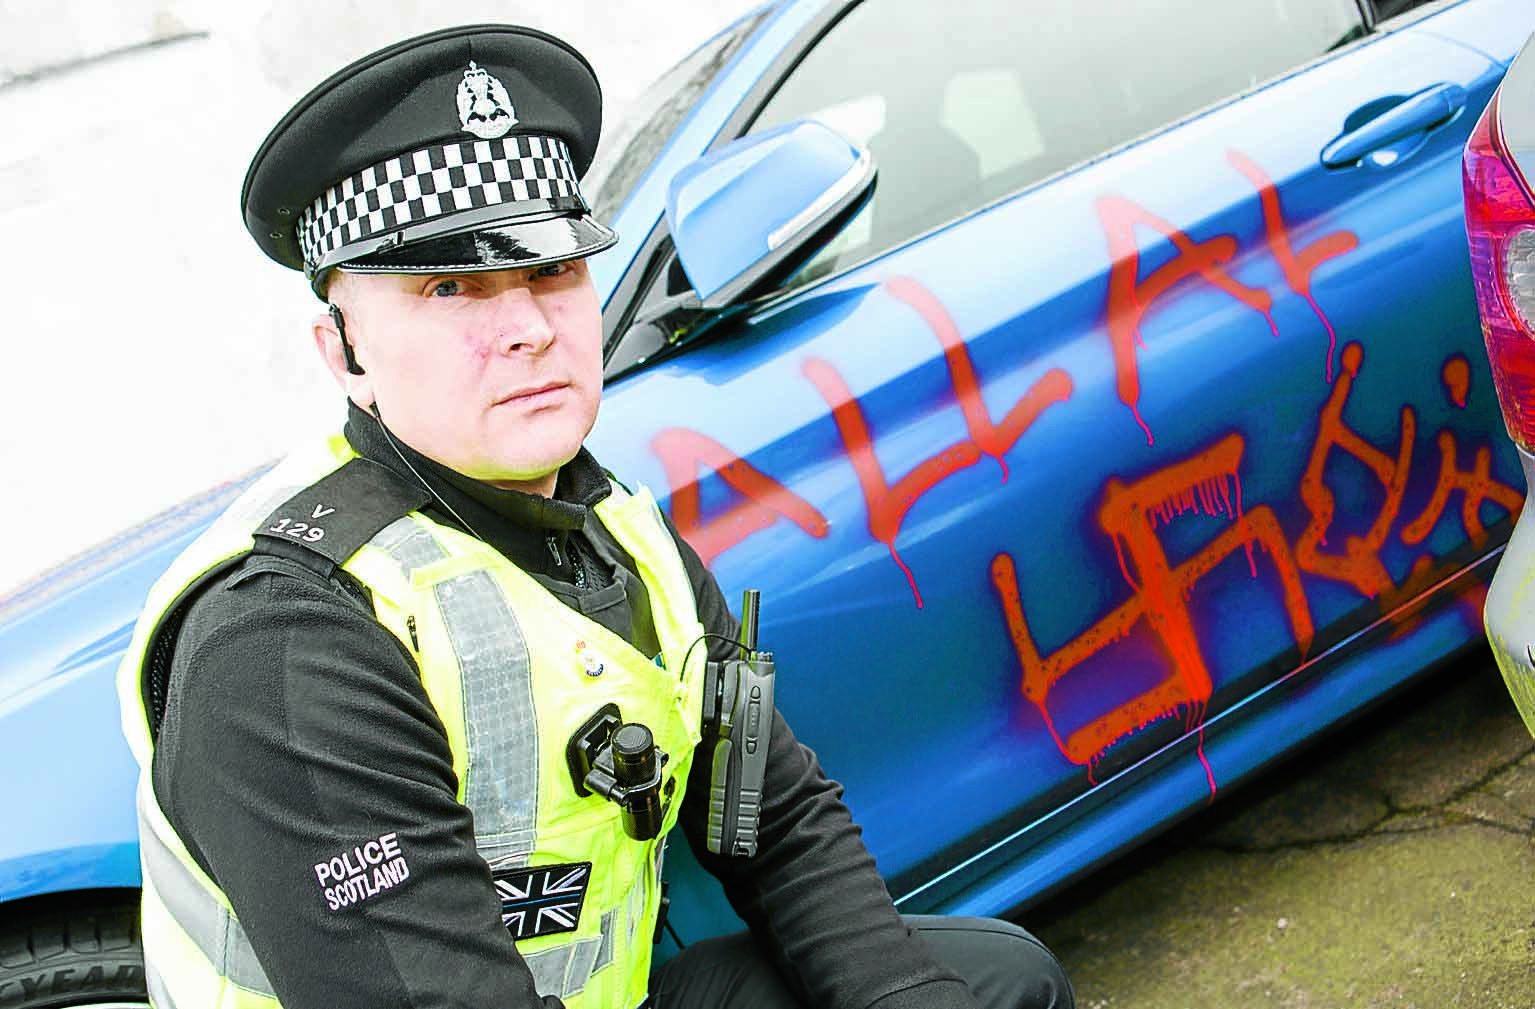 Anger at Nazi graffiti in town